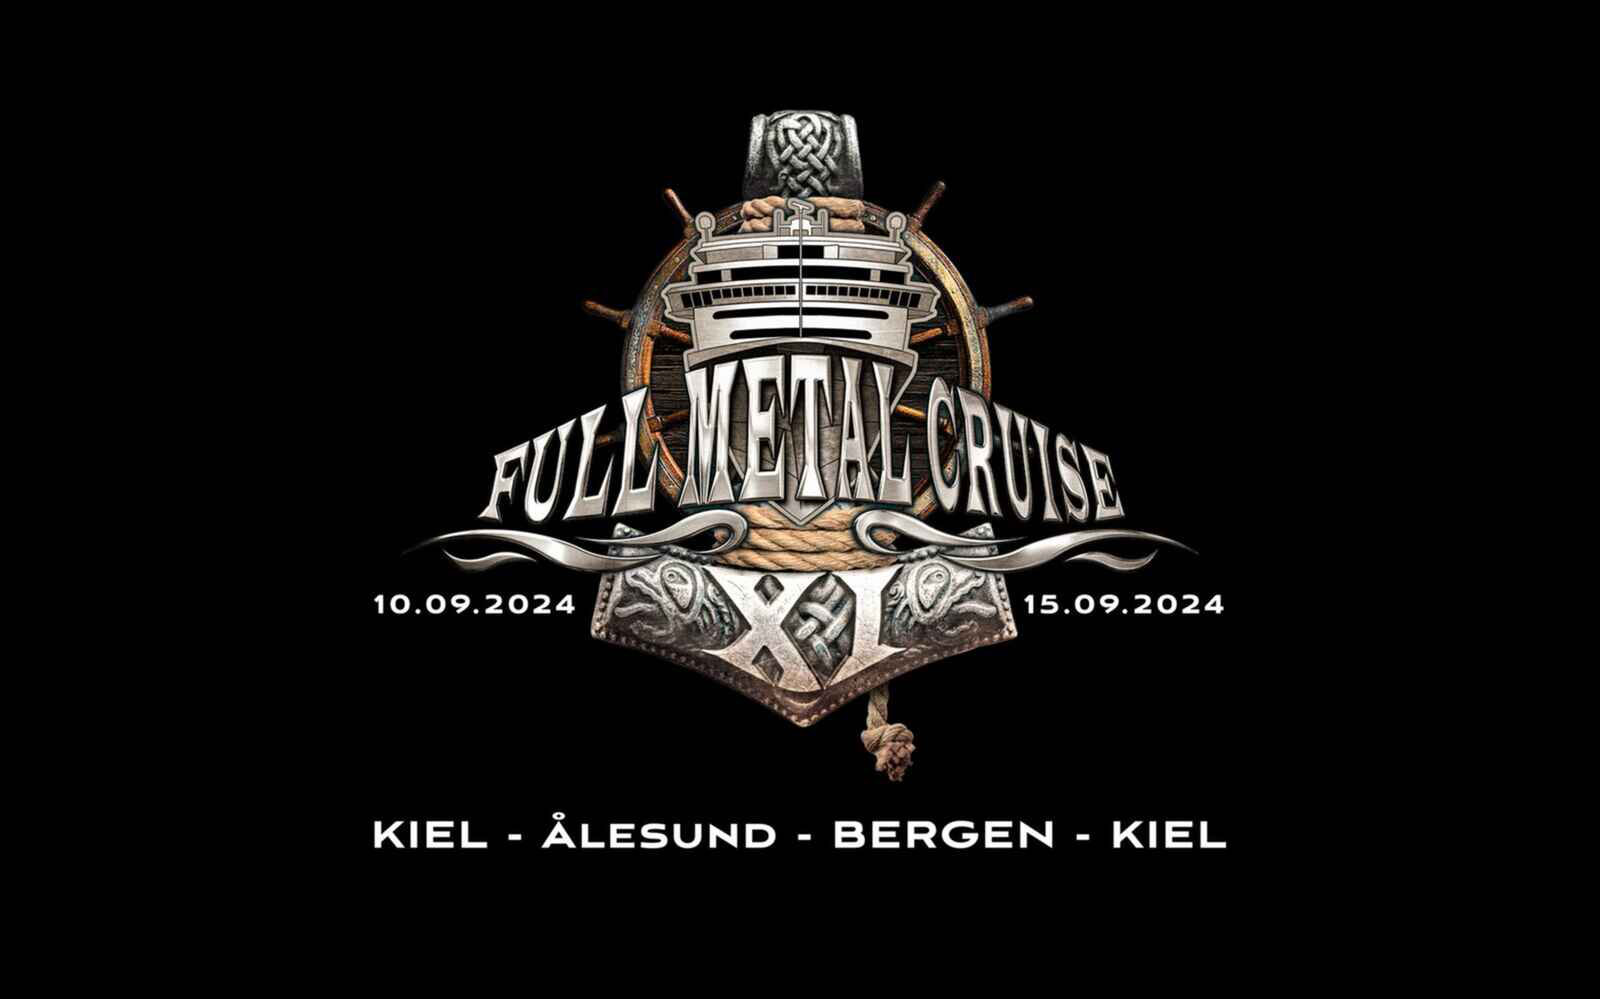 Full Metal Cruise XI 10. bis 15 September 2024 jetzt vormerken